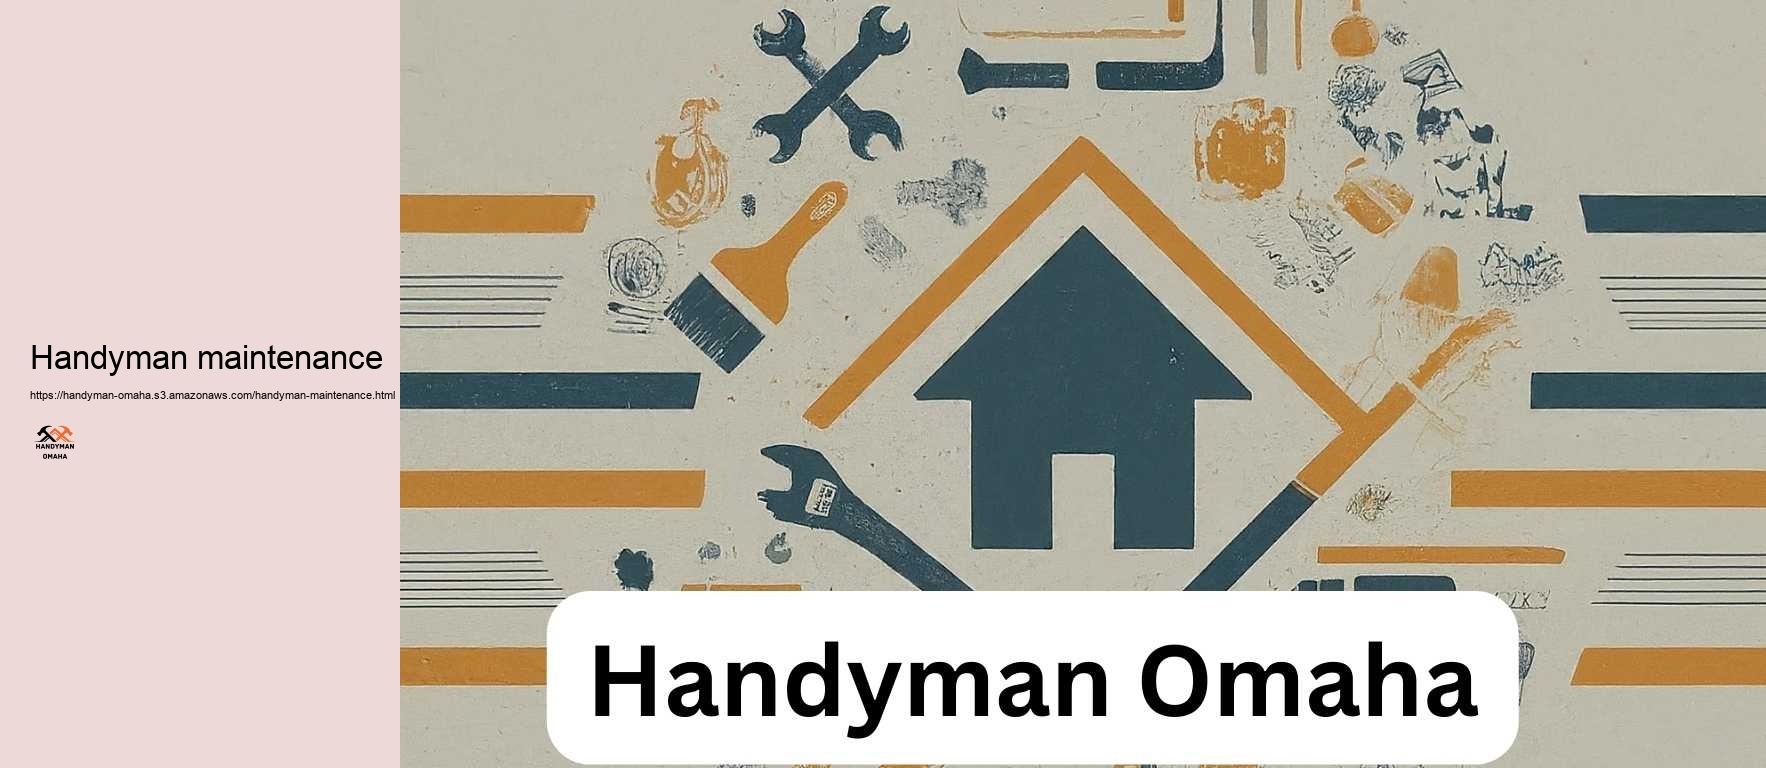 Handyman maintenance